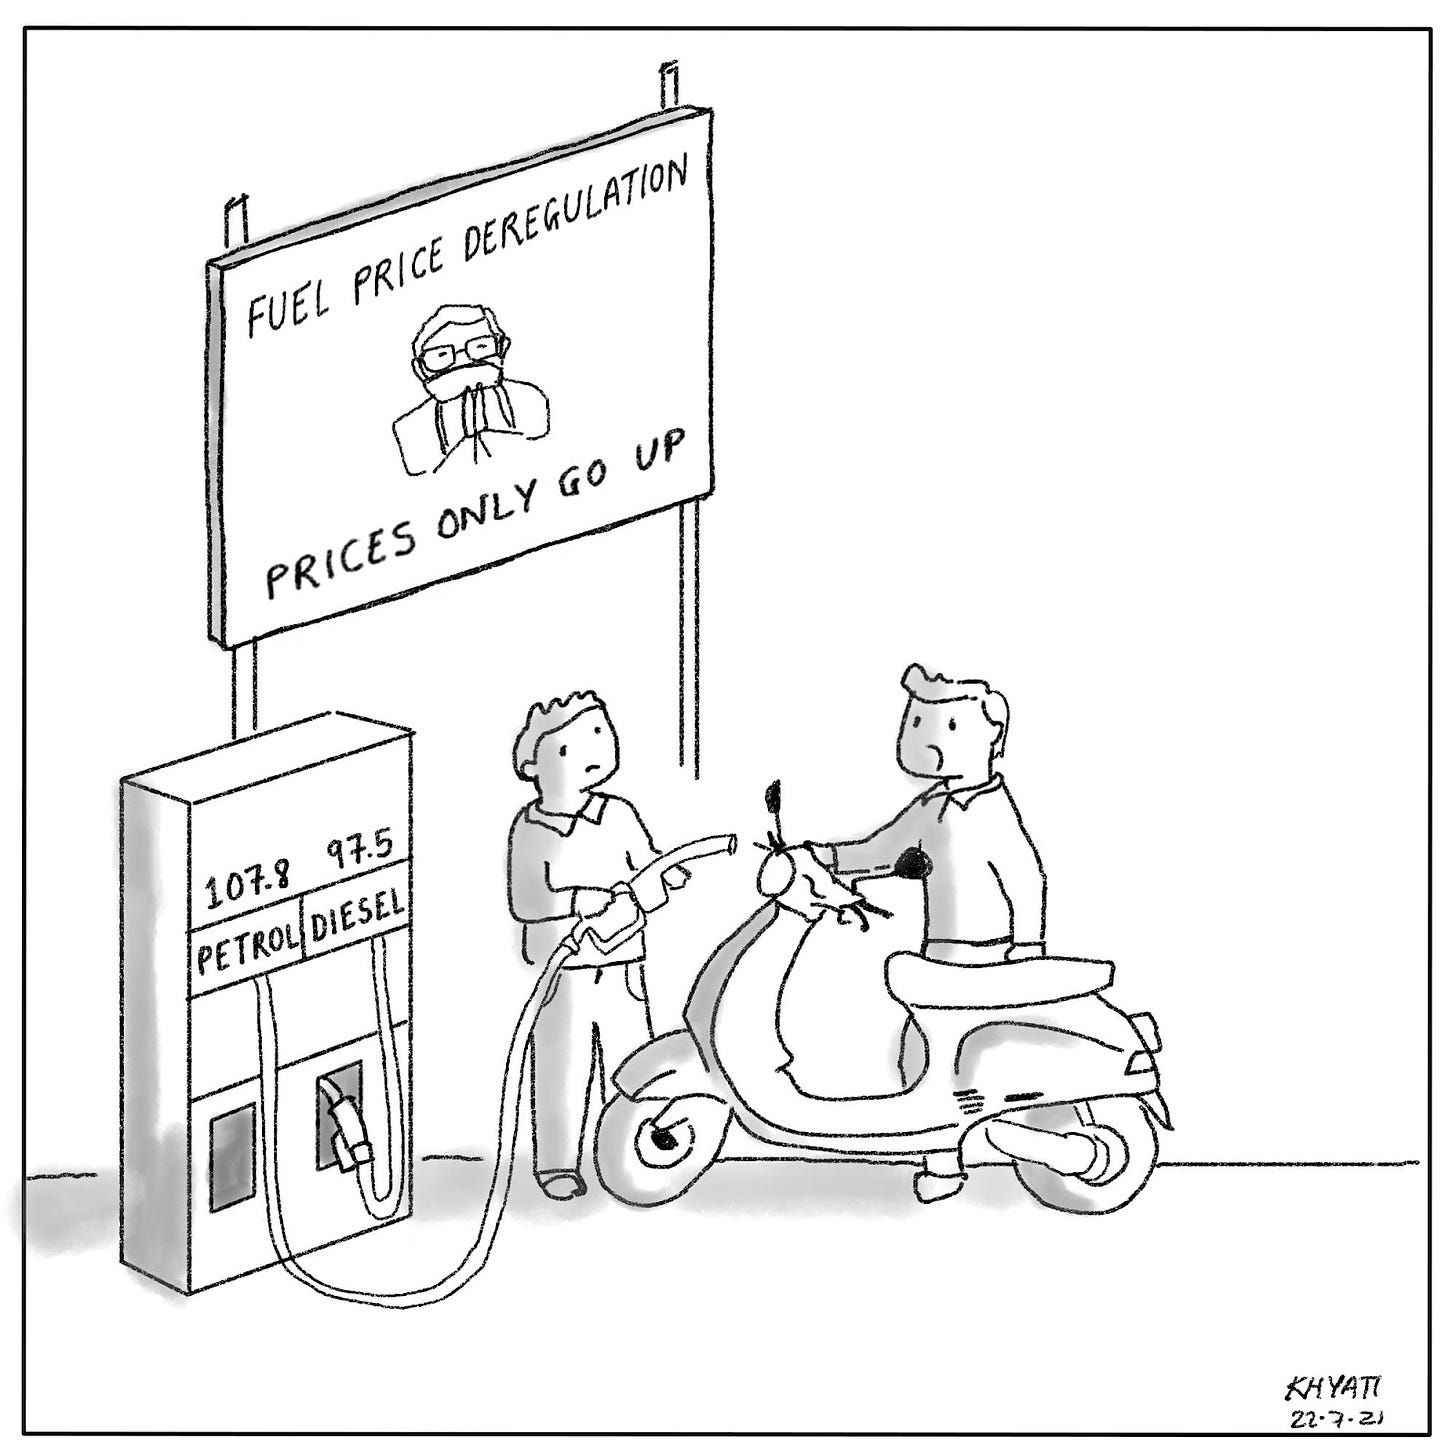 comic on Fuel Price deregulation